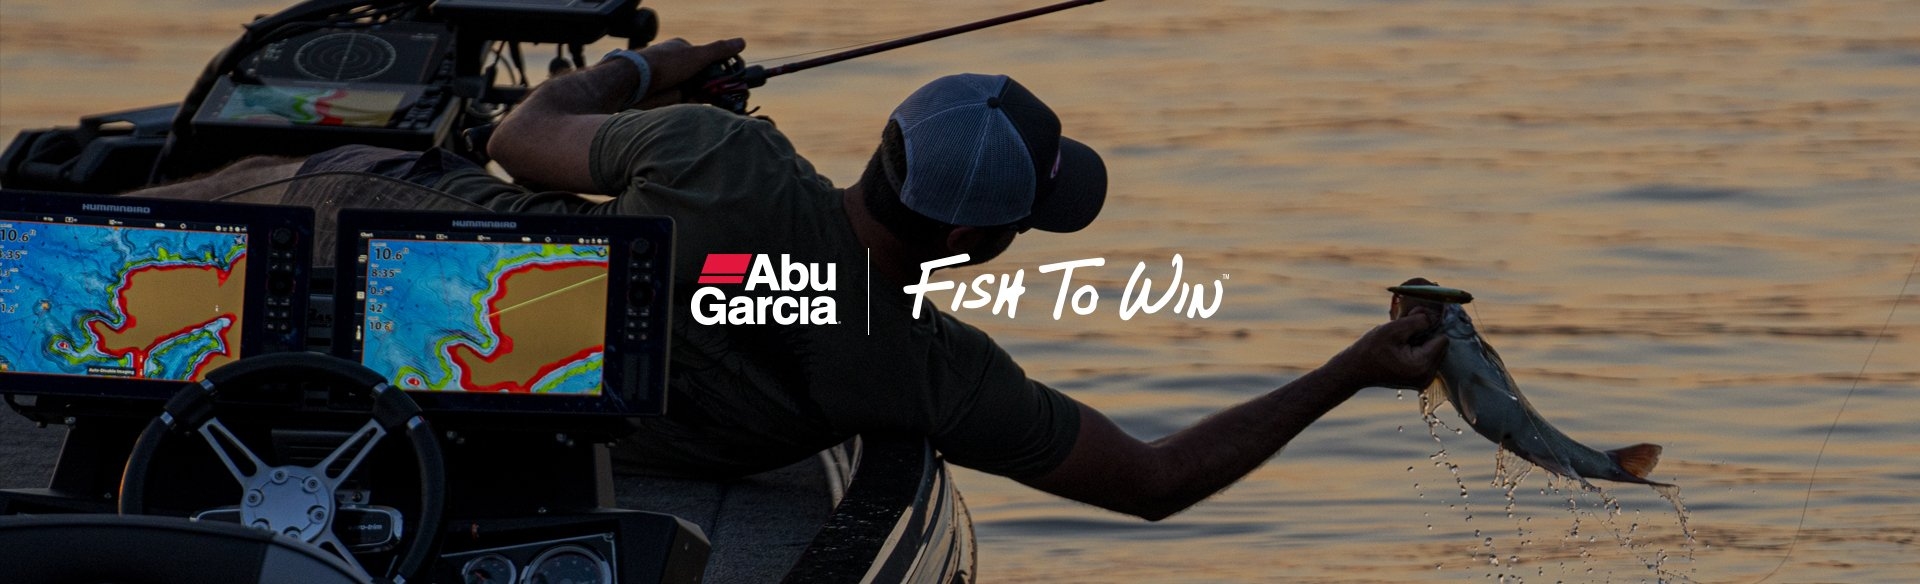 Abu Garcia: Fish to Win.